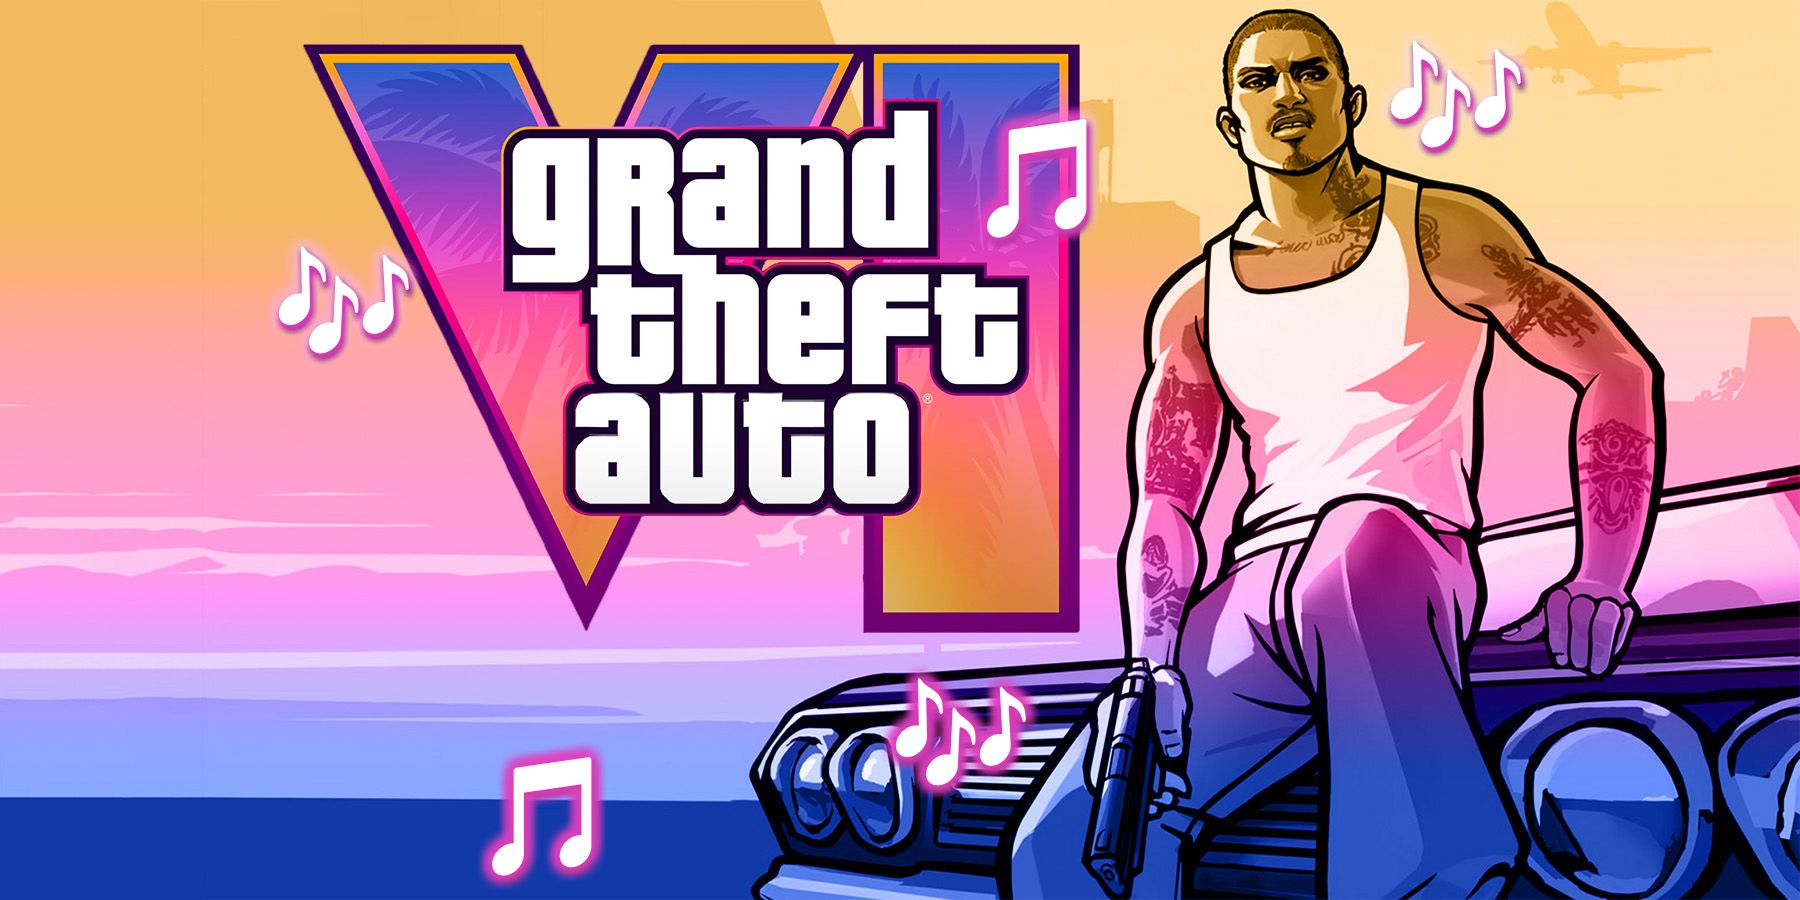 Grand Theft Auto 6 logo over San Andreas Cesar Vialpando artwork with music notes